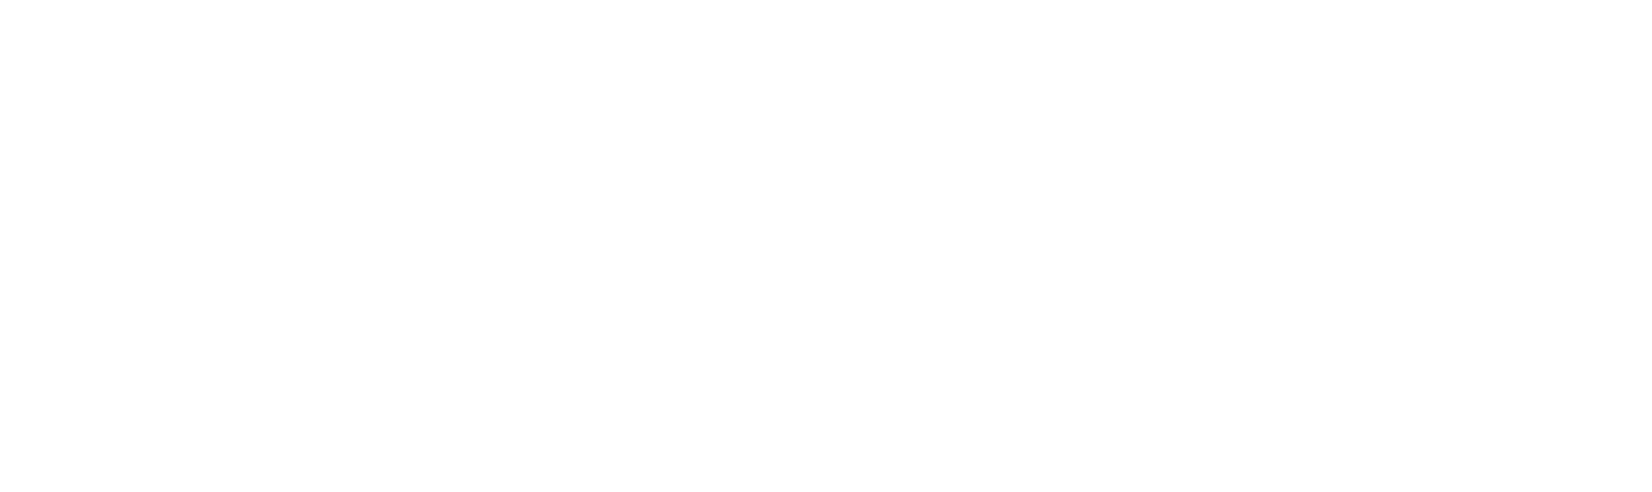 community-logo-v2-light-bg-horiz-1